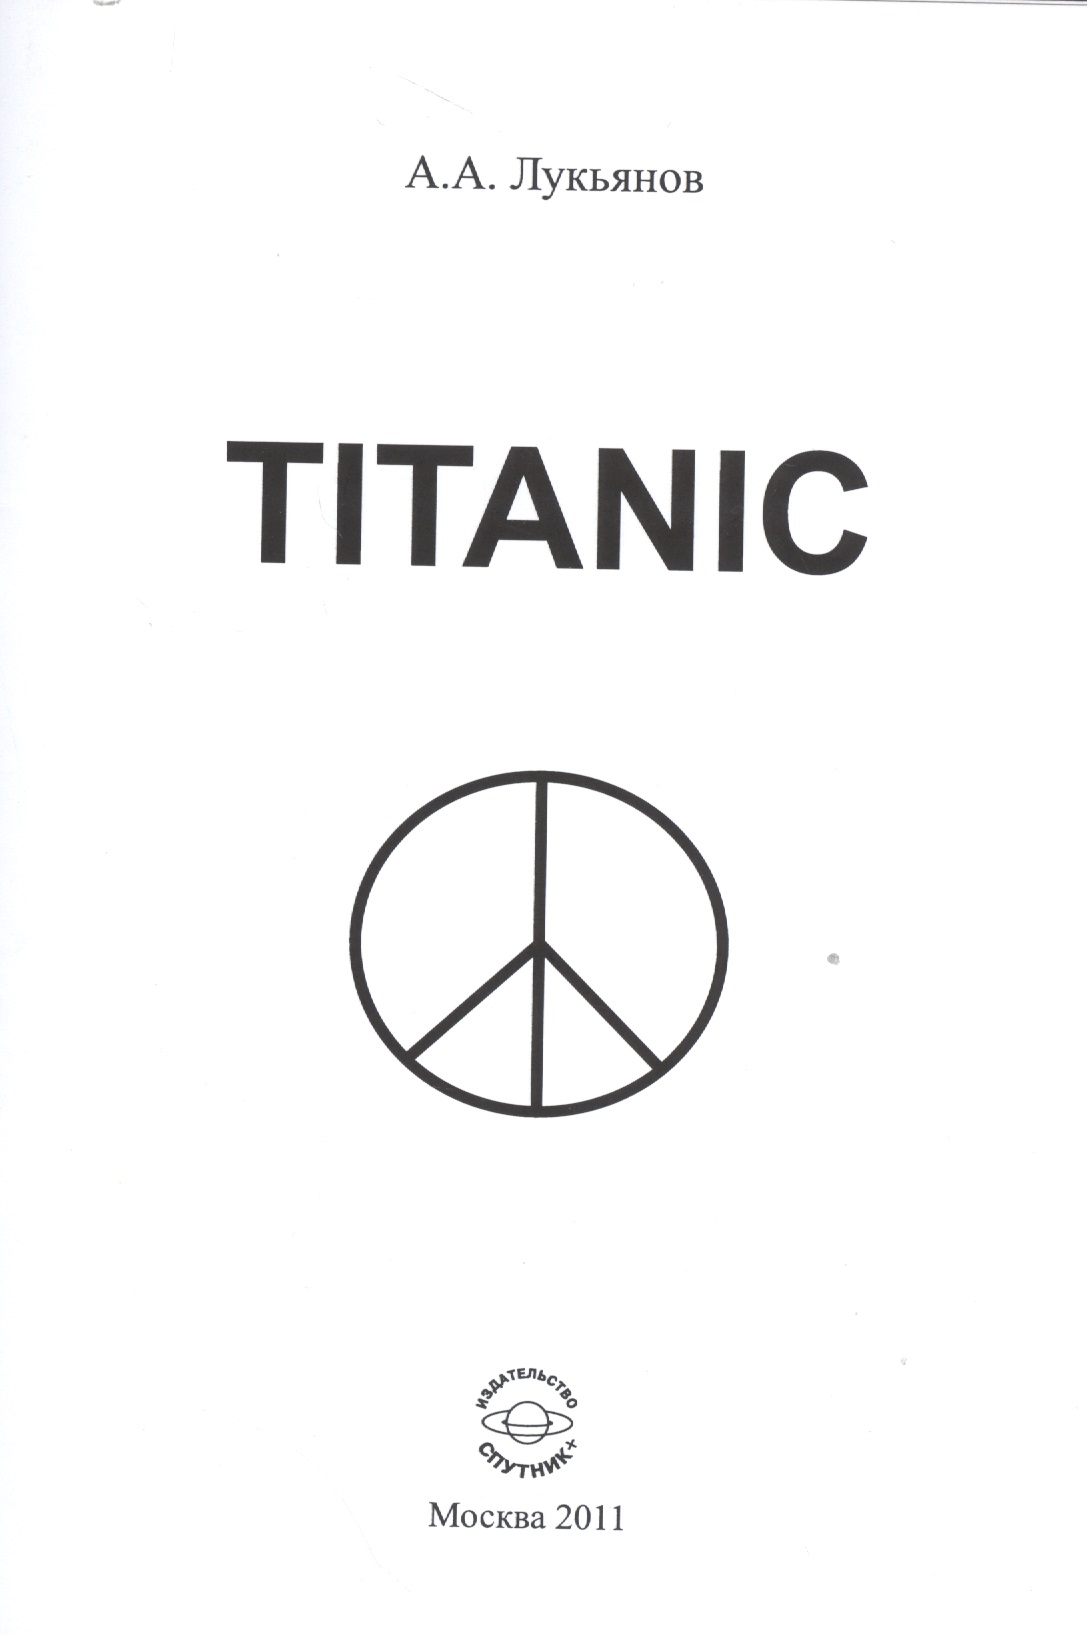 Titanic 10445re rms titanic